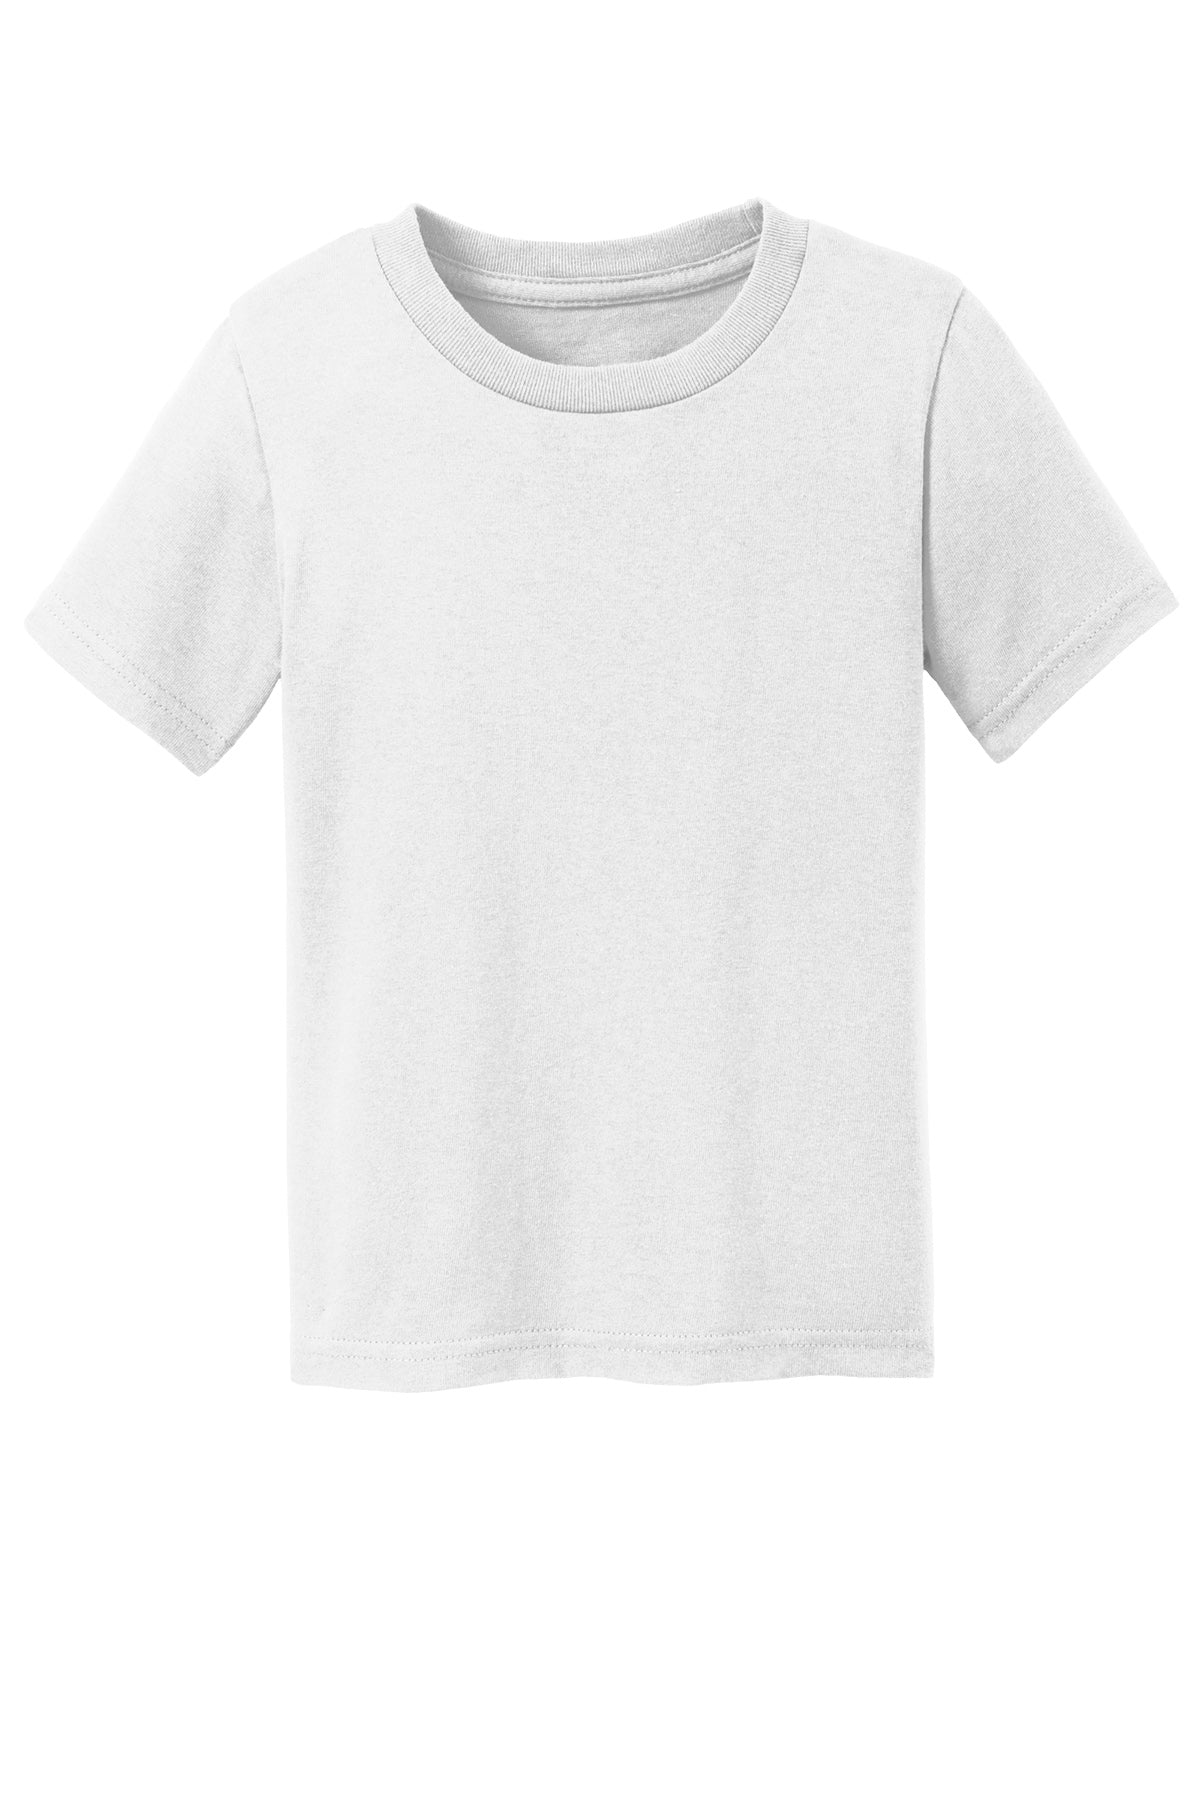 Port & Co Car54T Toddler T-Shirt 2T / White